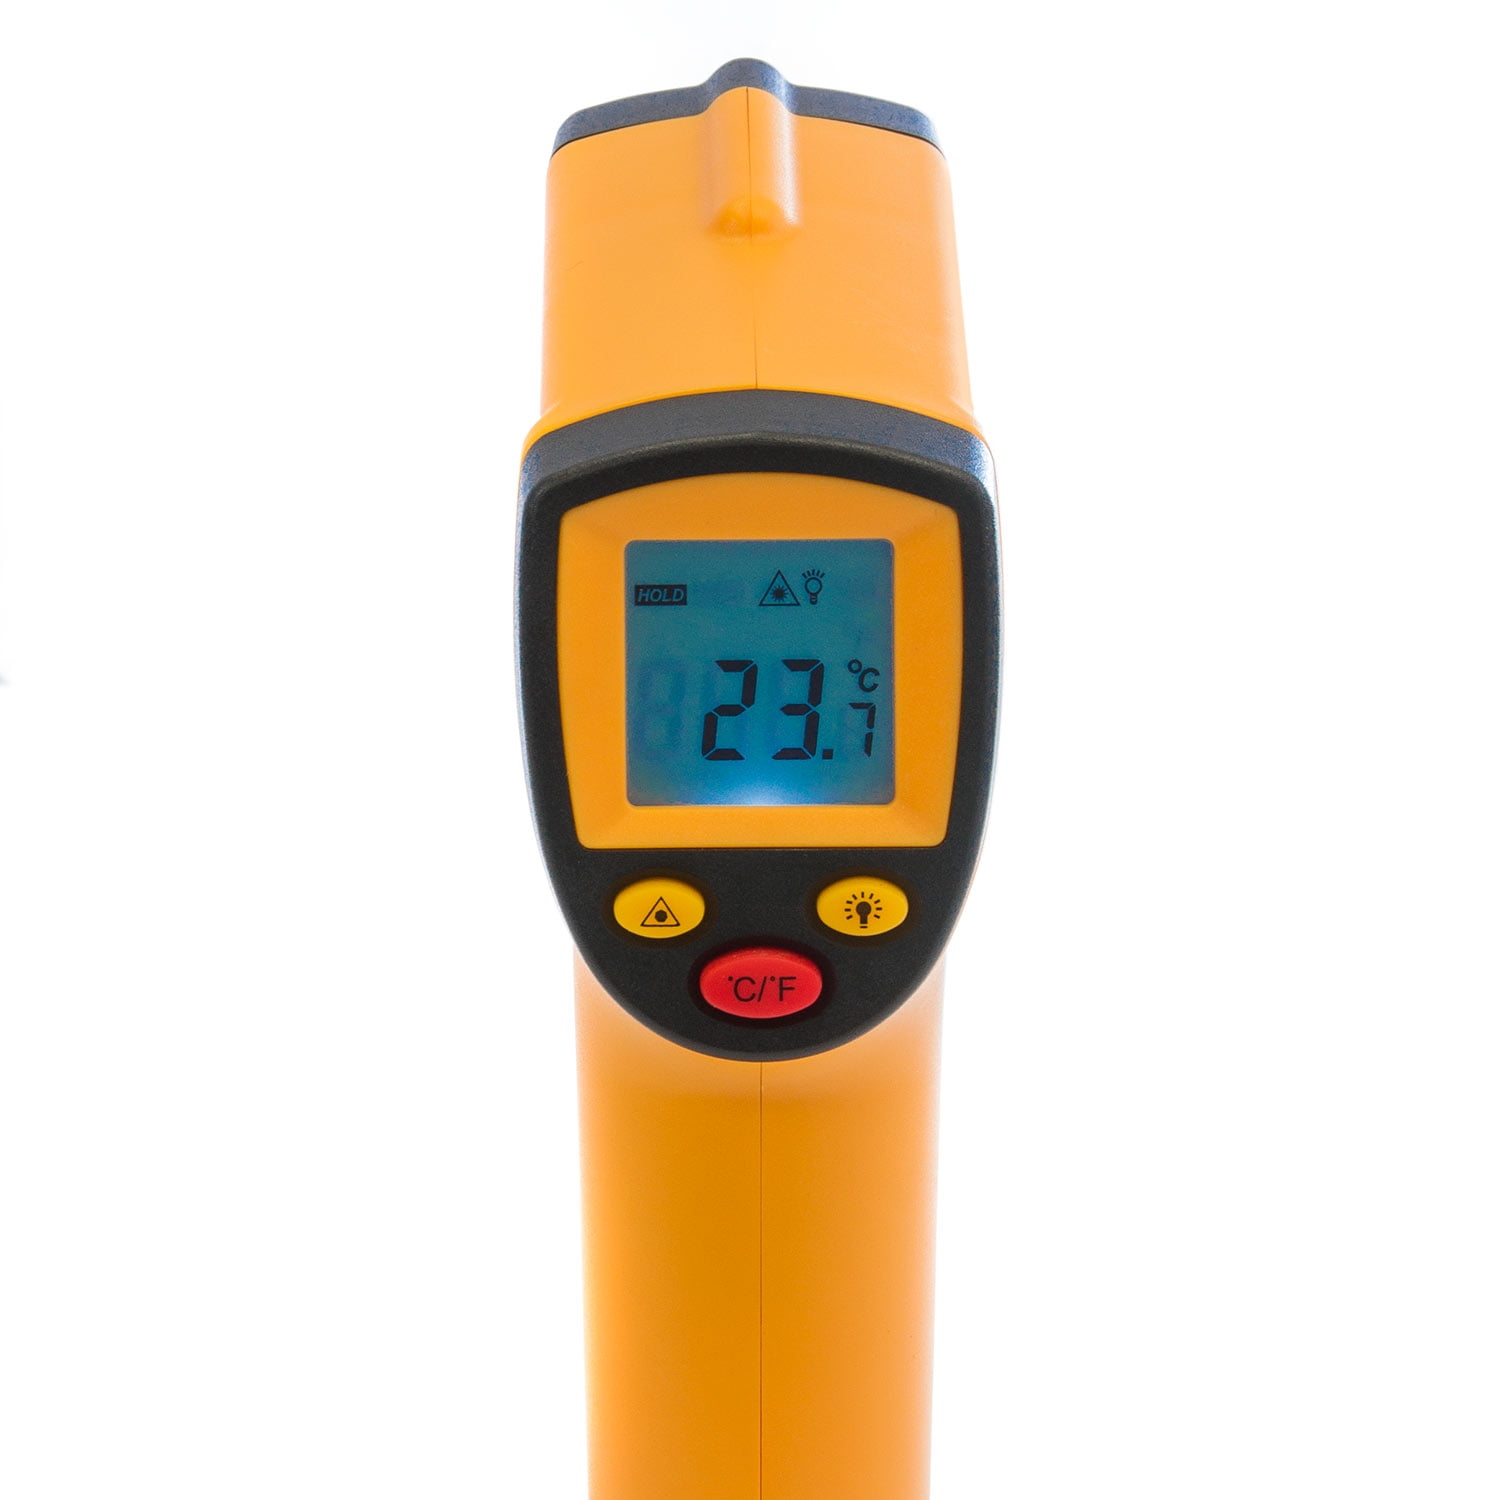 KETOTEK Laser Thermometer Gun Infrared Thermometer Digital Non Contact Food